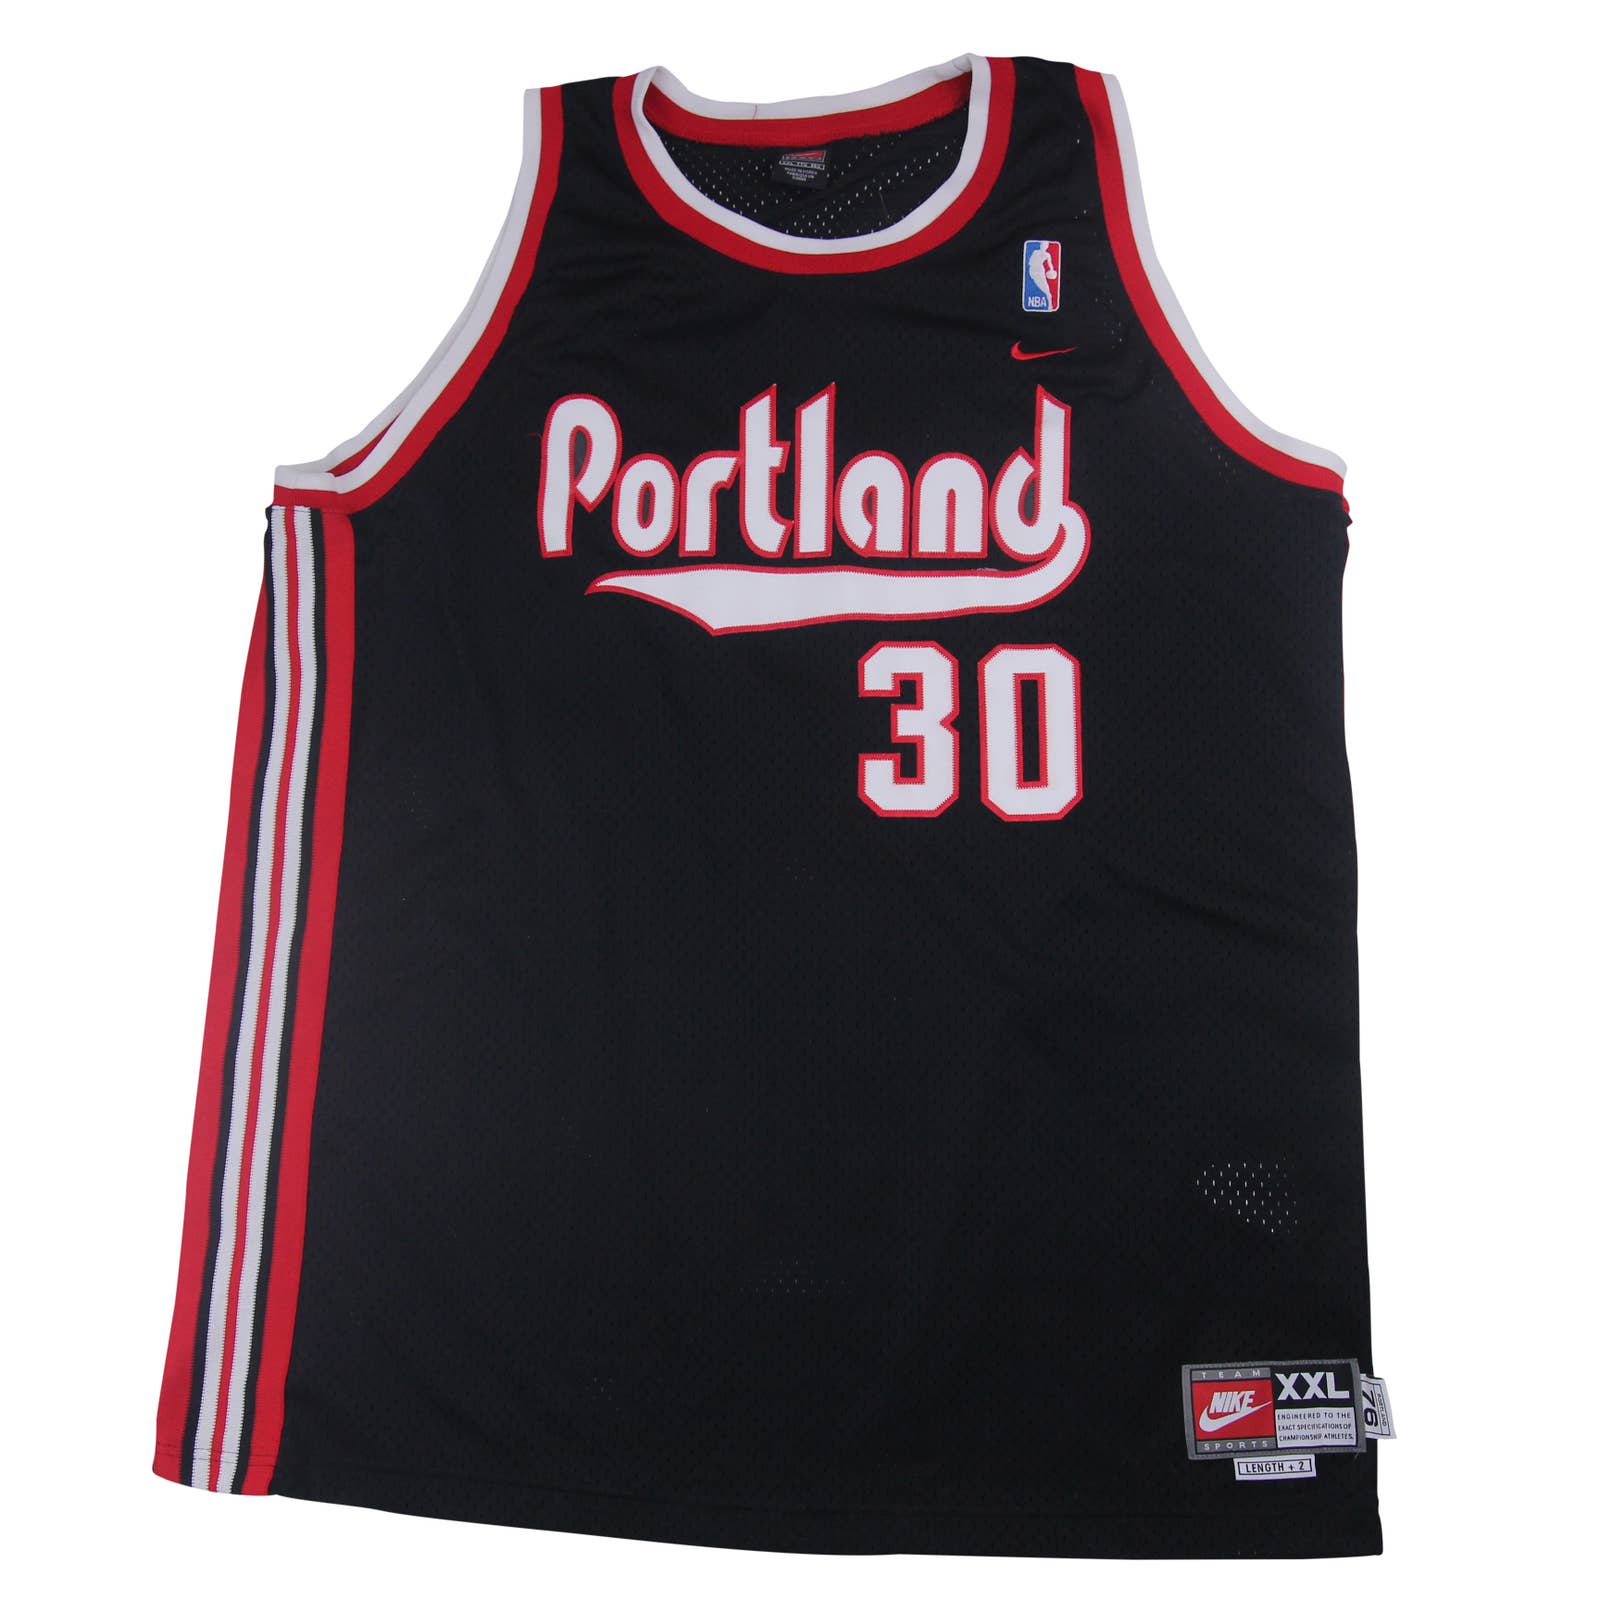 Nike NBA Authentic Rasheed Wallace Portland Trail Blazers Jersey